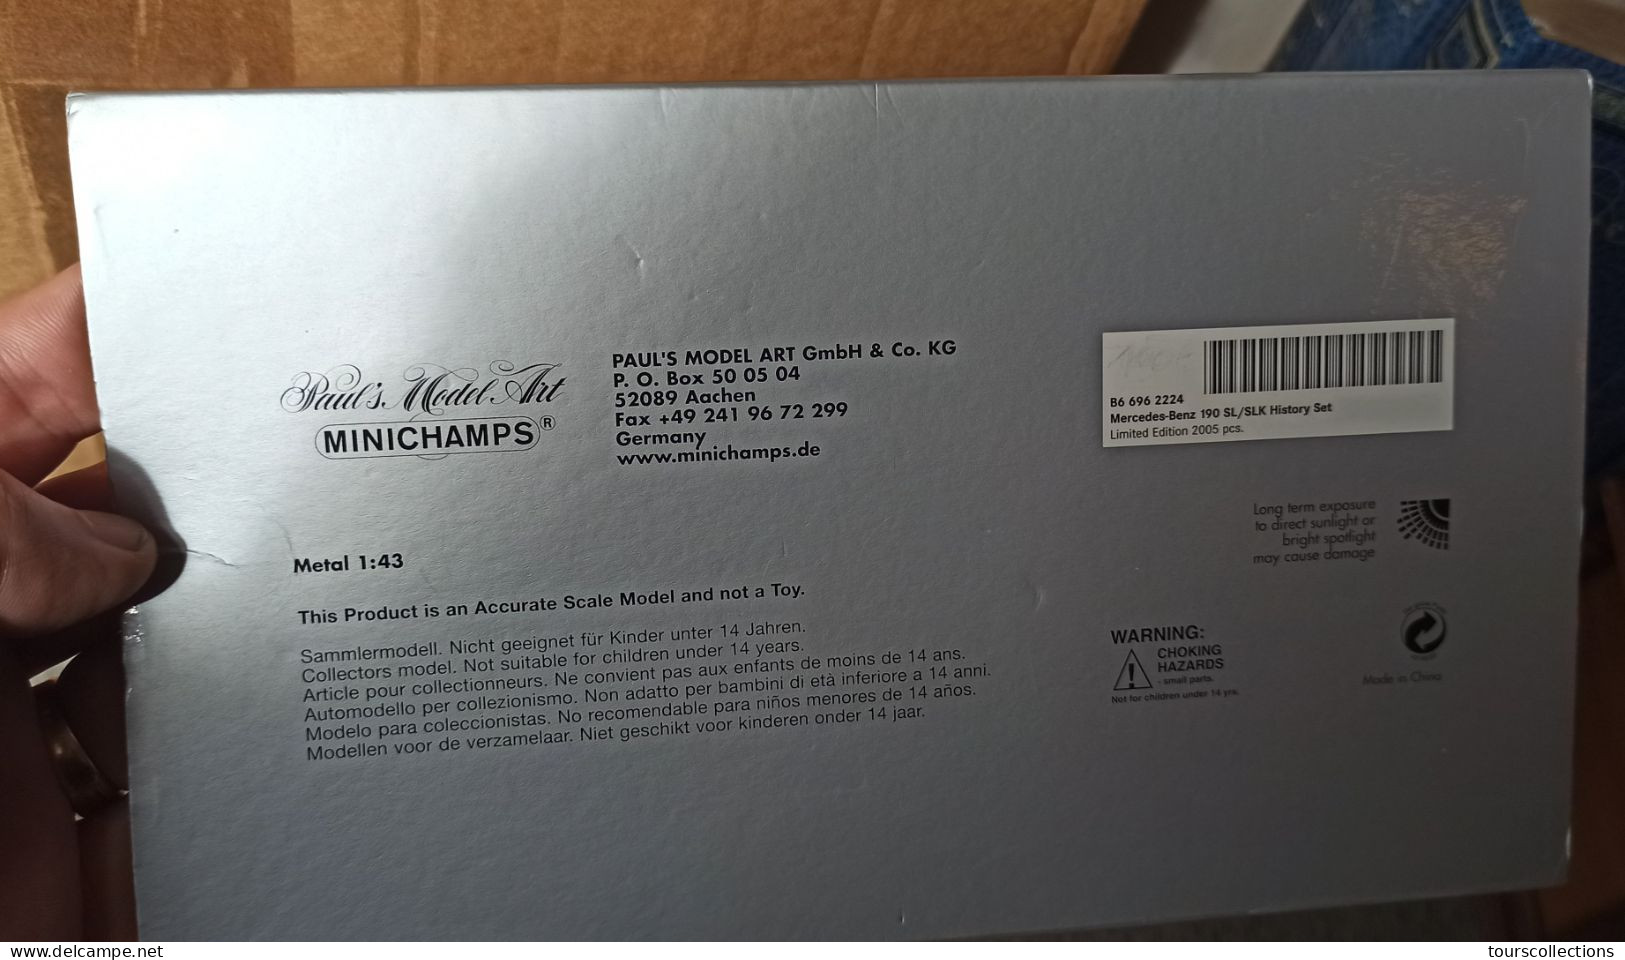 1/43 MINICHAMPS - MERCEDES Coffret Duo 190 SL / SLK @ Ref B6 696 2224 History Set Limited Edition 2005 Pcs - Minichamps